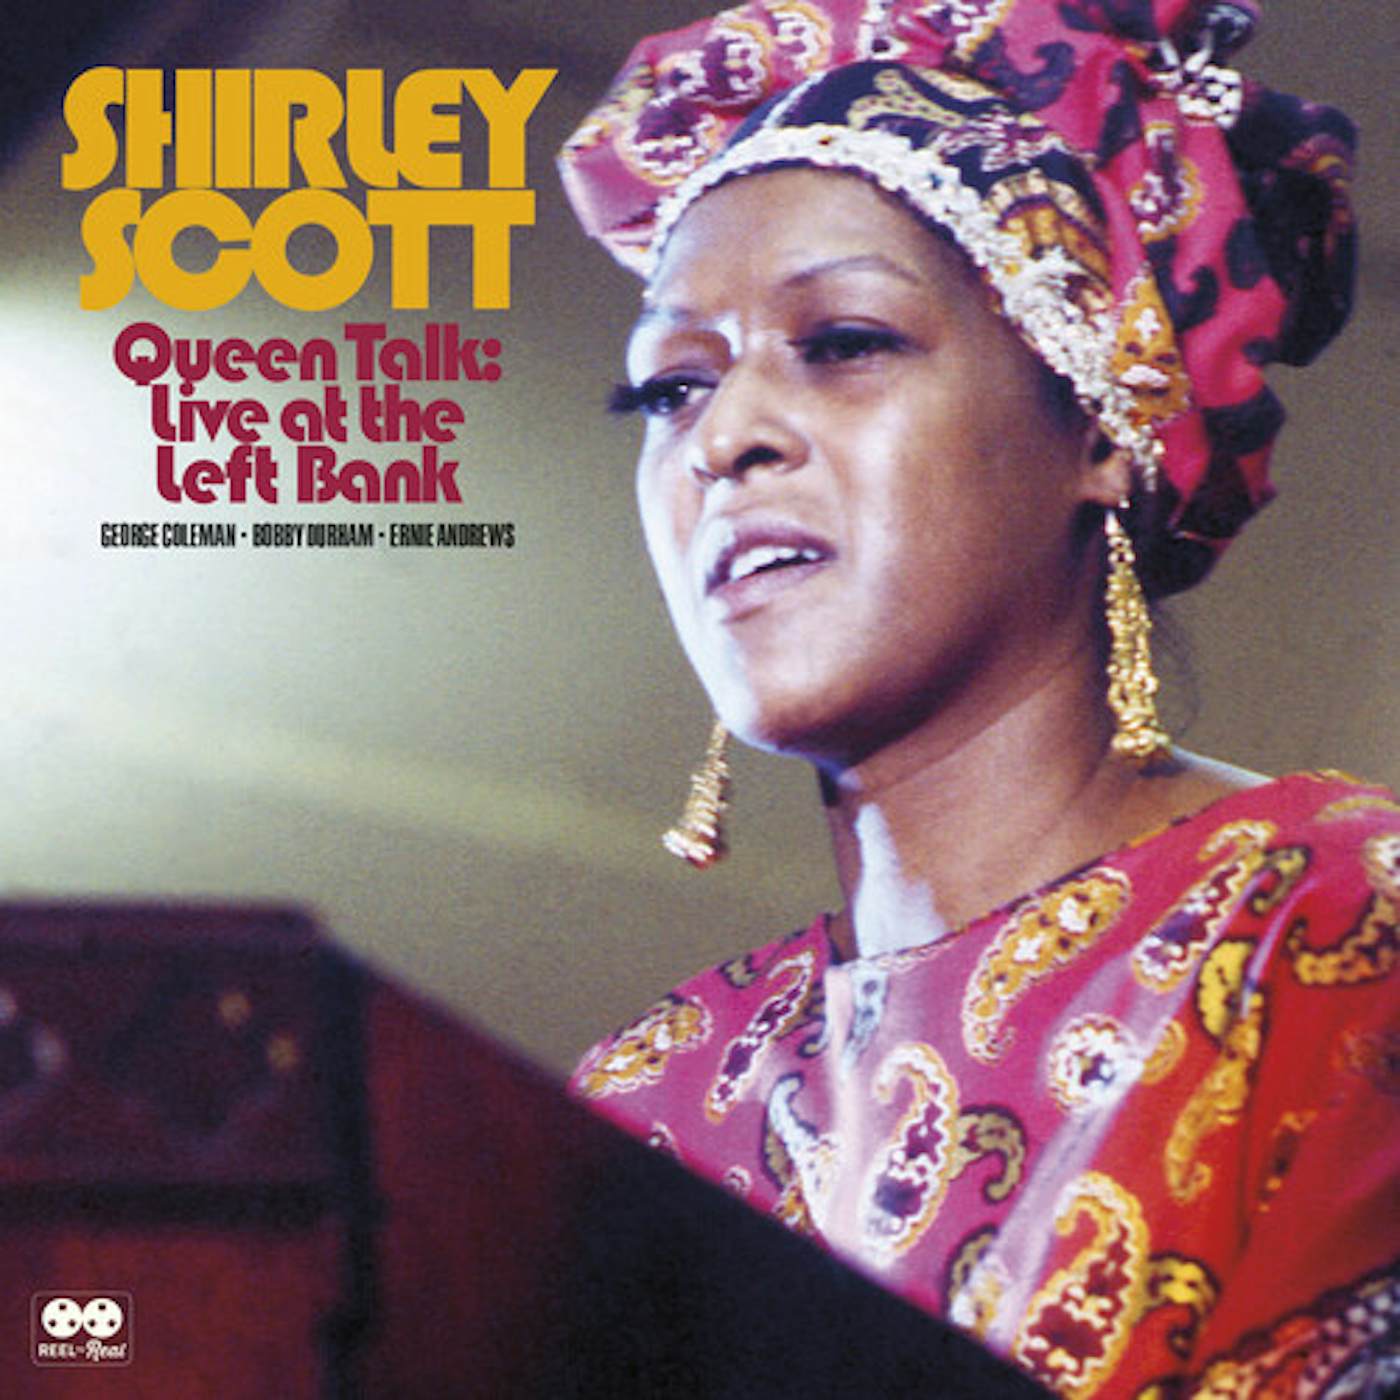 Shirley Scott QUEEN TALK: LIVE AT THE LEFT BANK CD